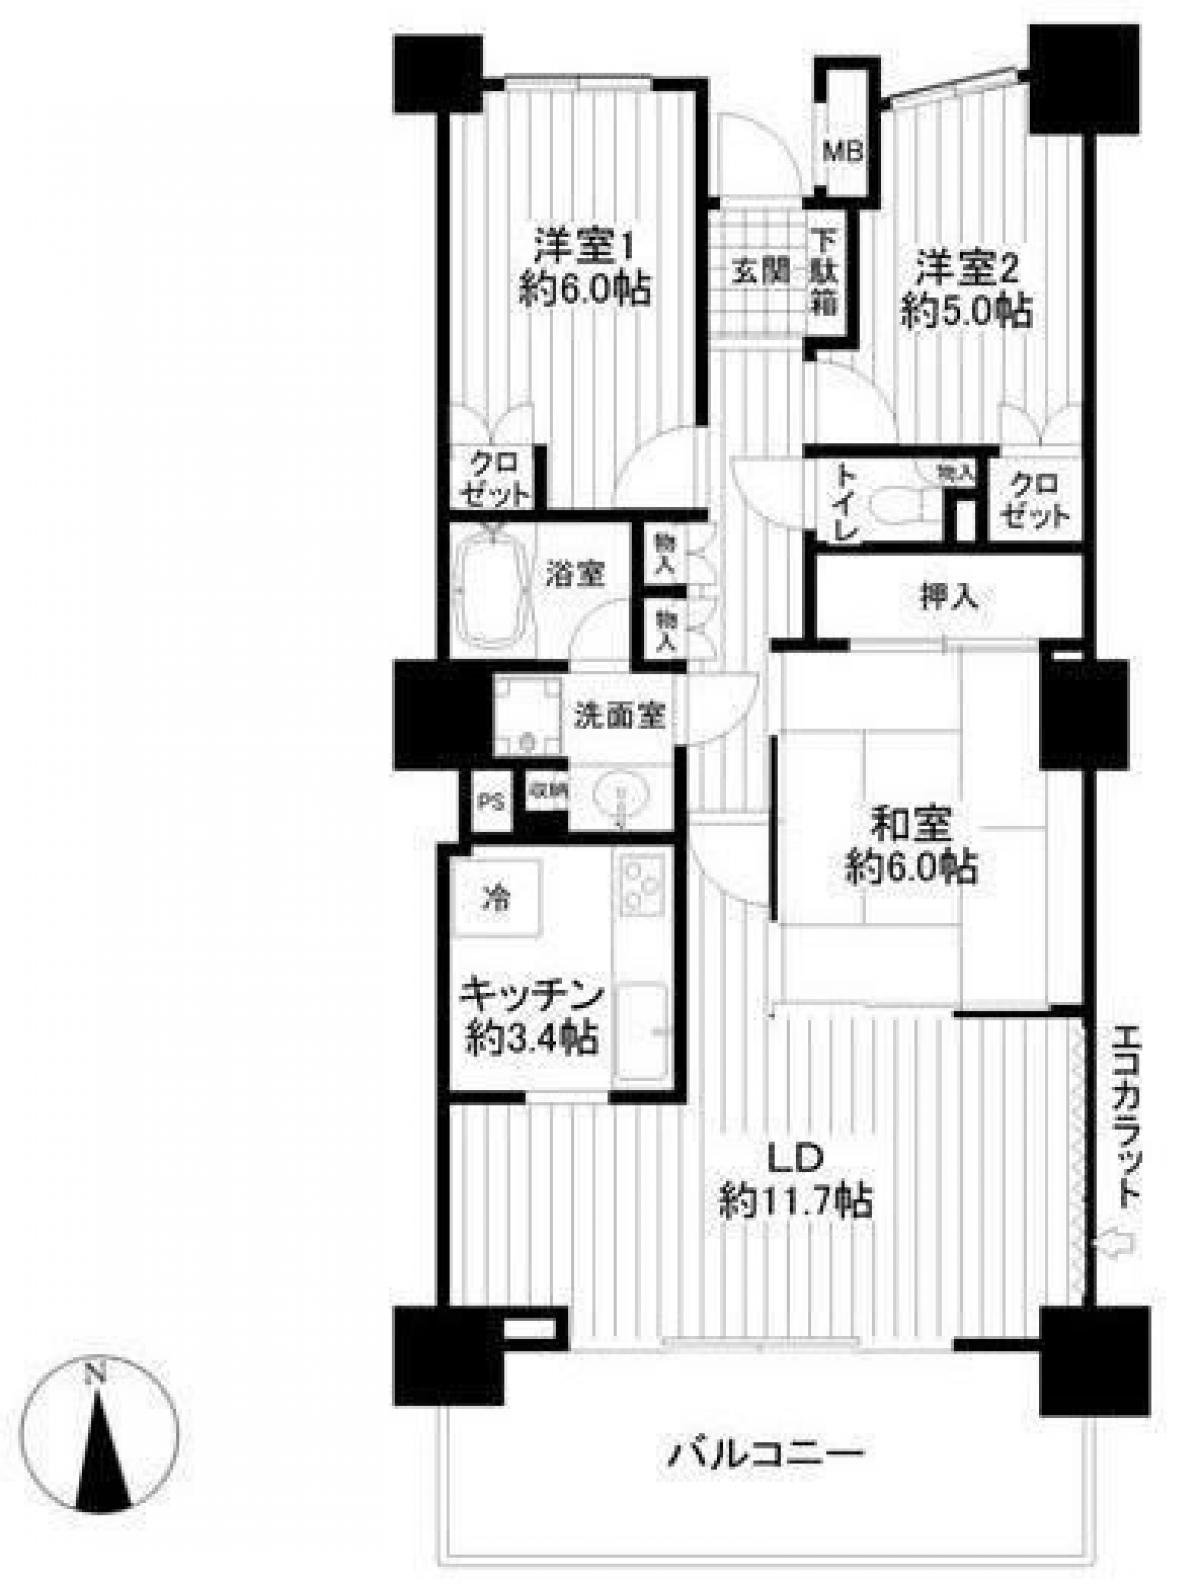 Picture of Apartment For Sale in Saitama Shi Chuo Ku, Saitama, Japan